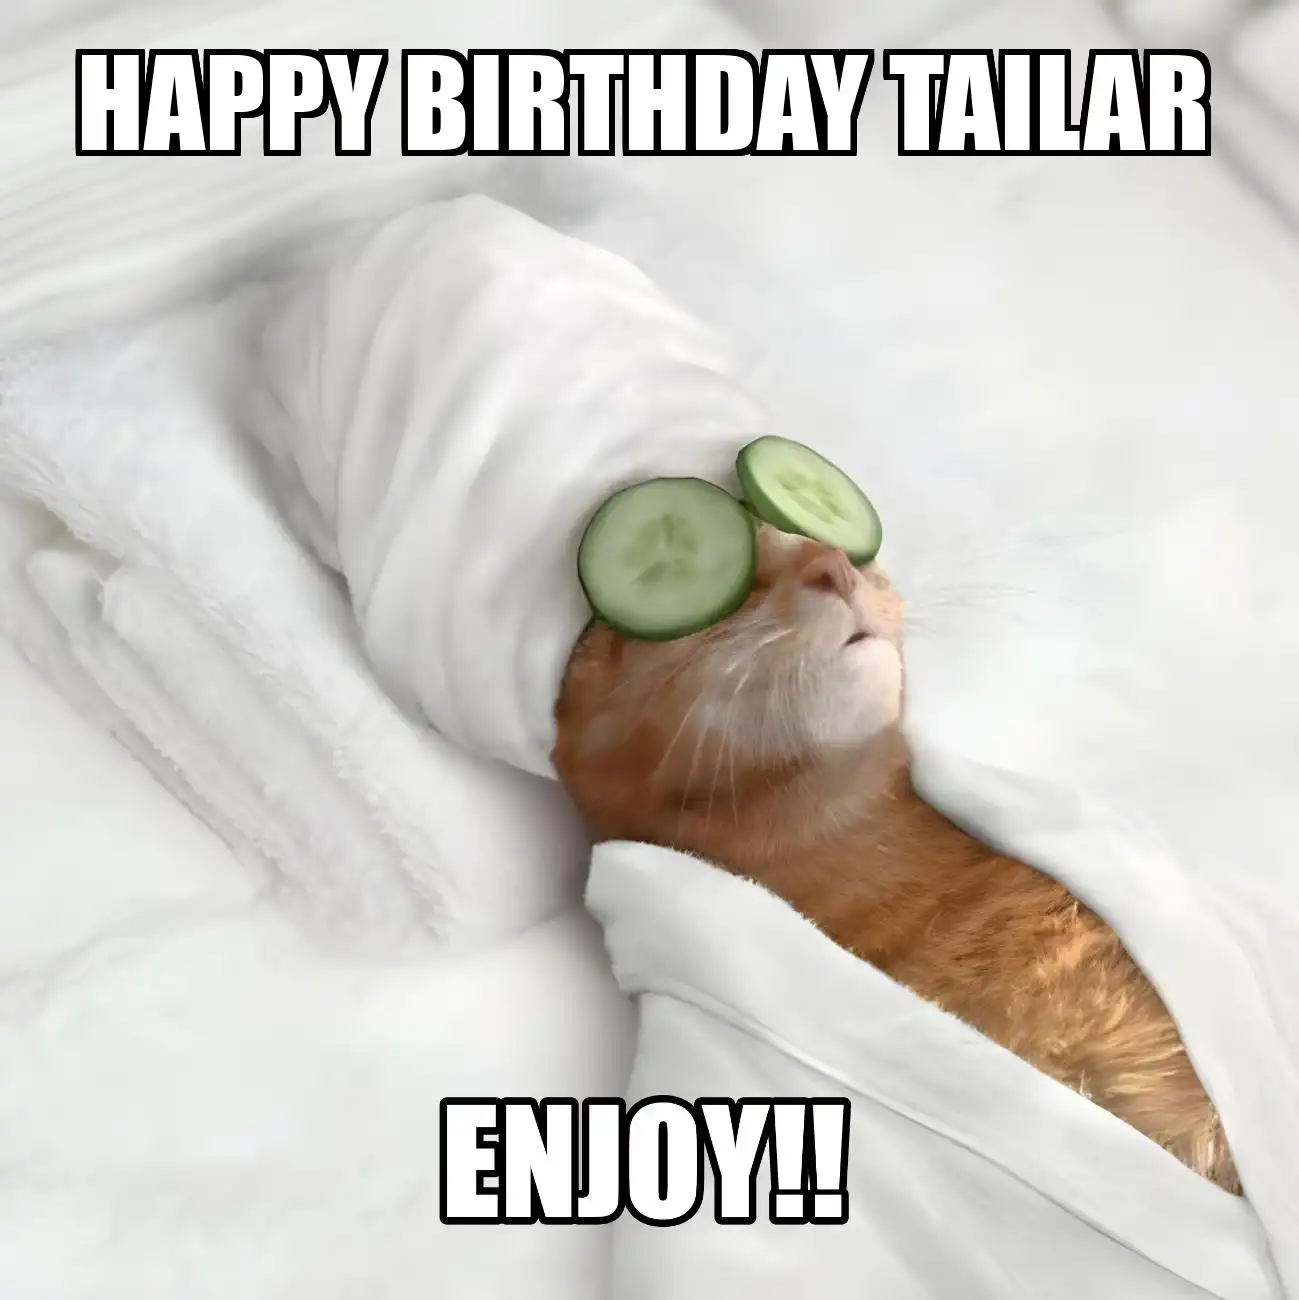 Happy Birthday Tailar Enjoy Cat Meme